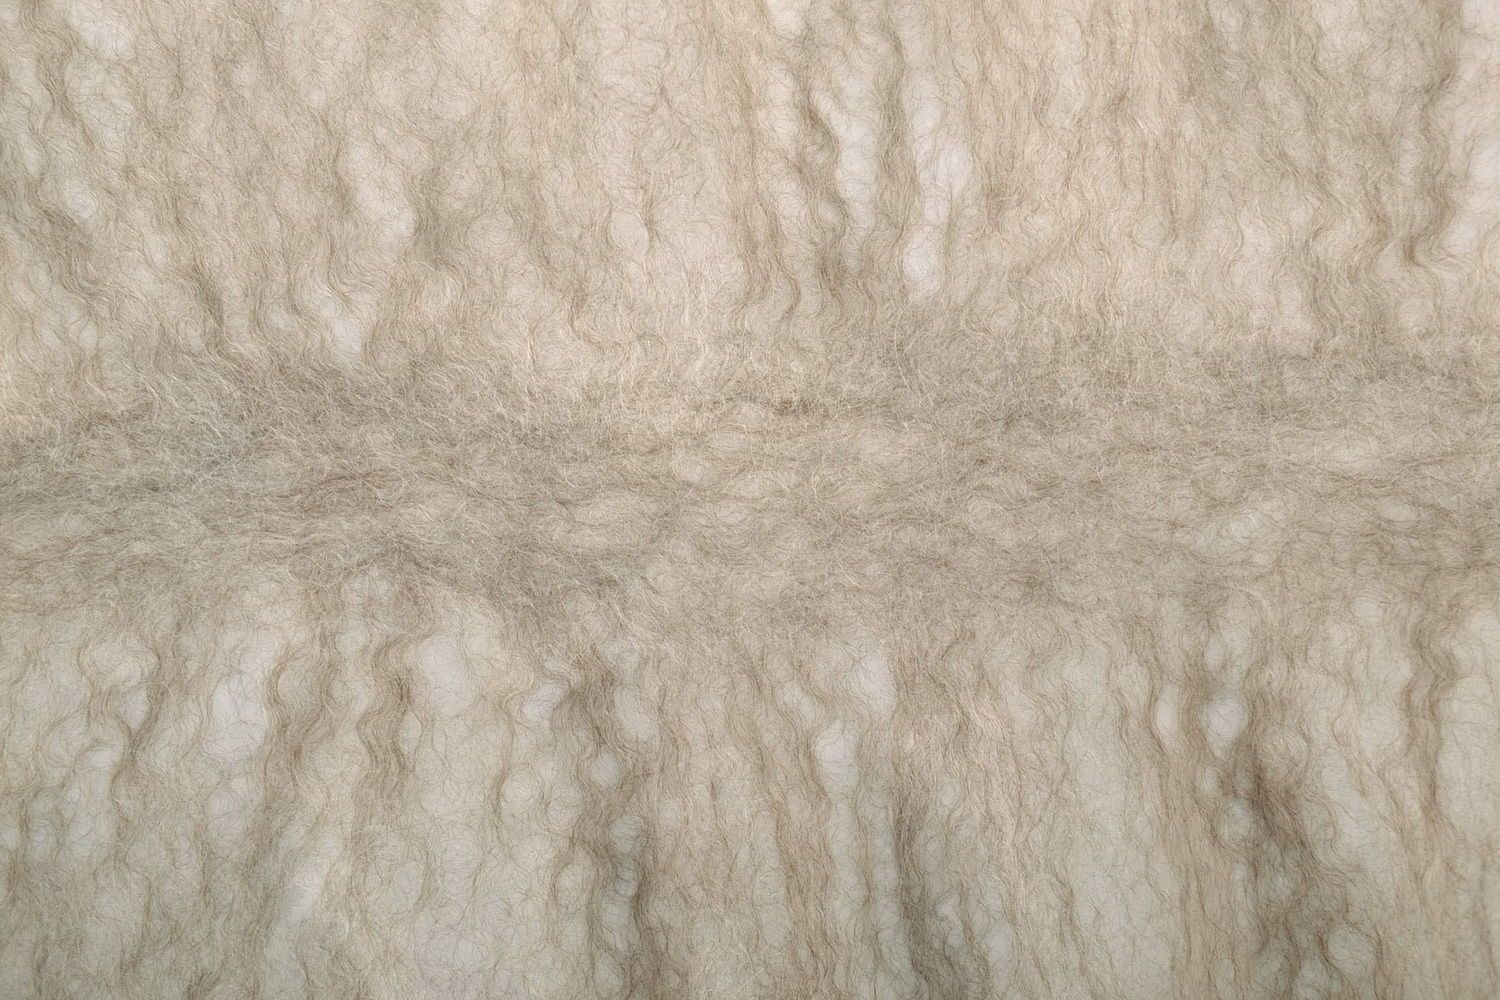 Palatine en laine naturelle faite main photo 5